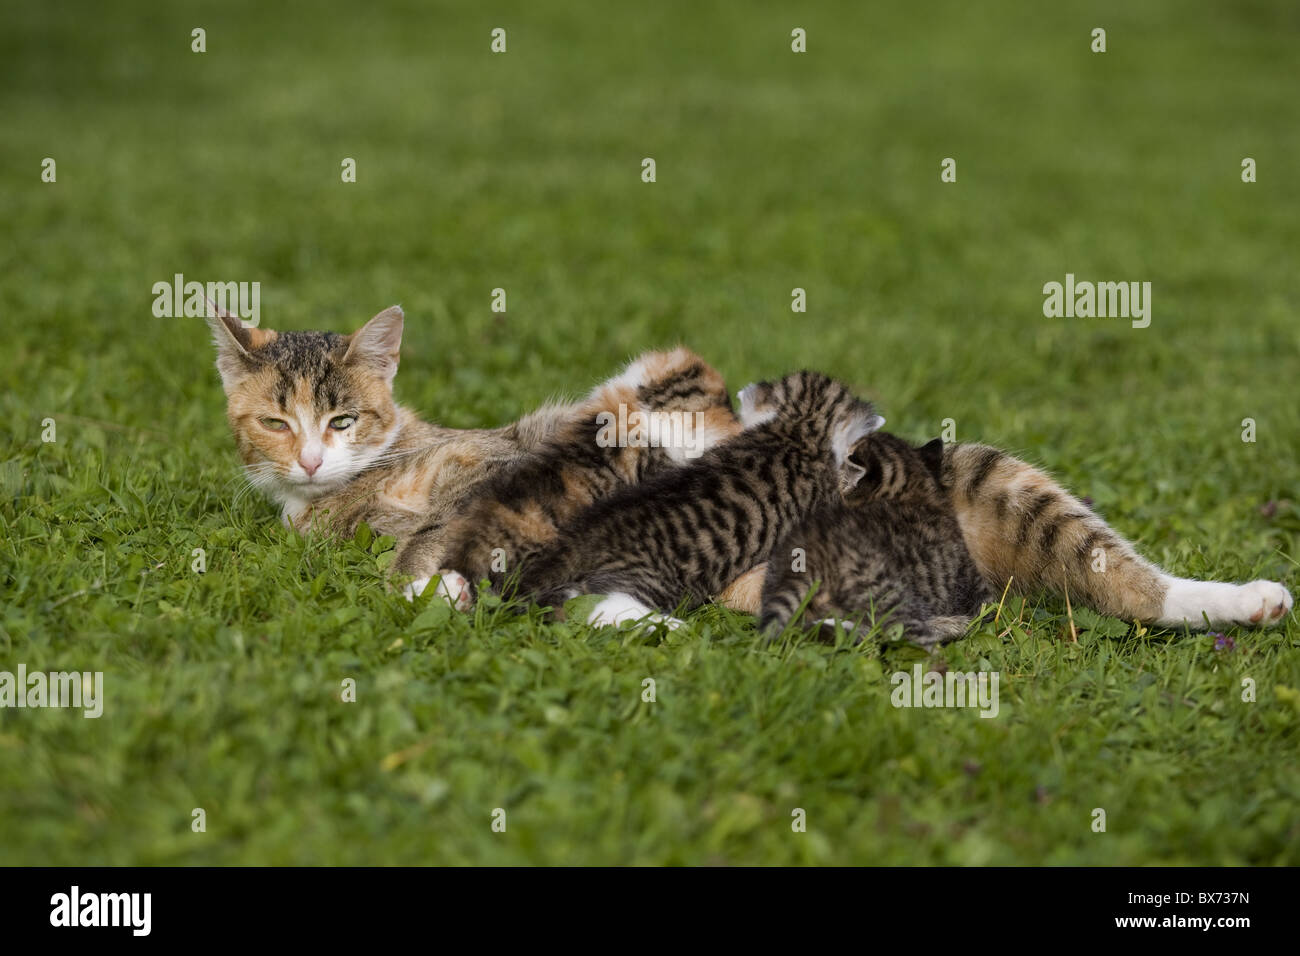 katze saeugt kaetzchen, cat nursing kitten Stock Photo